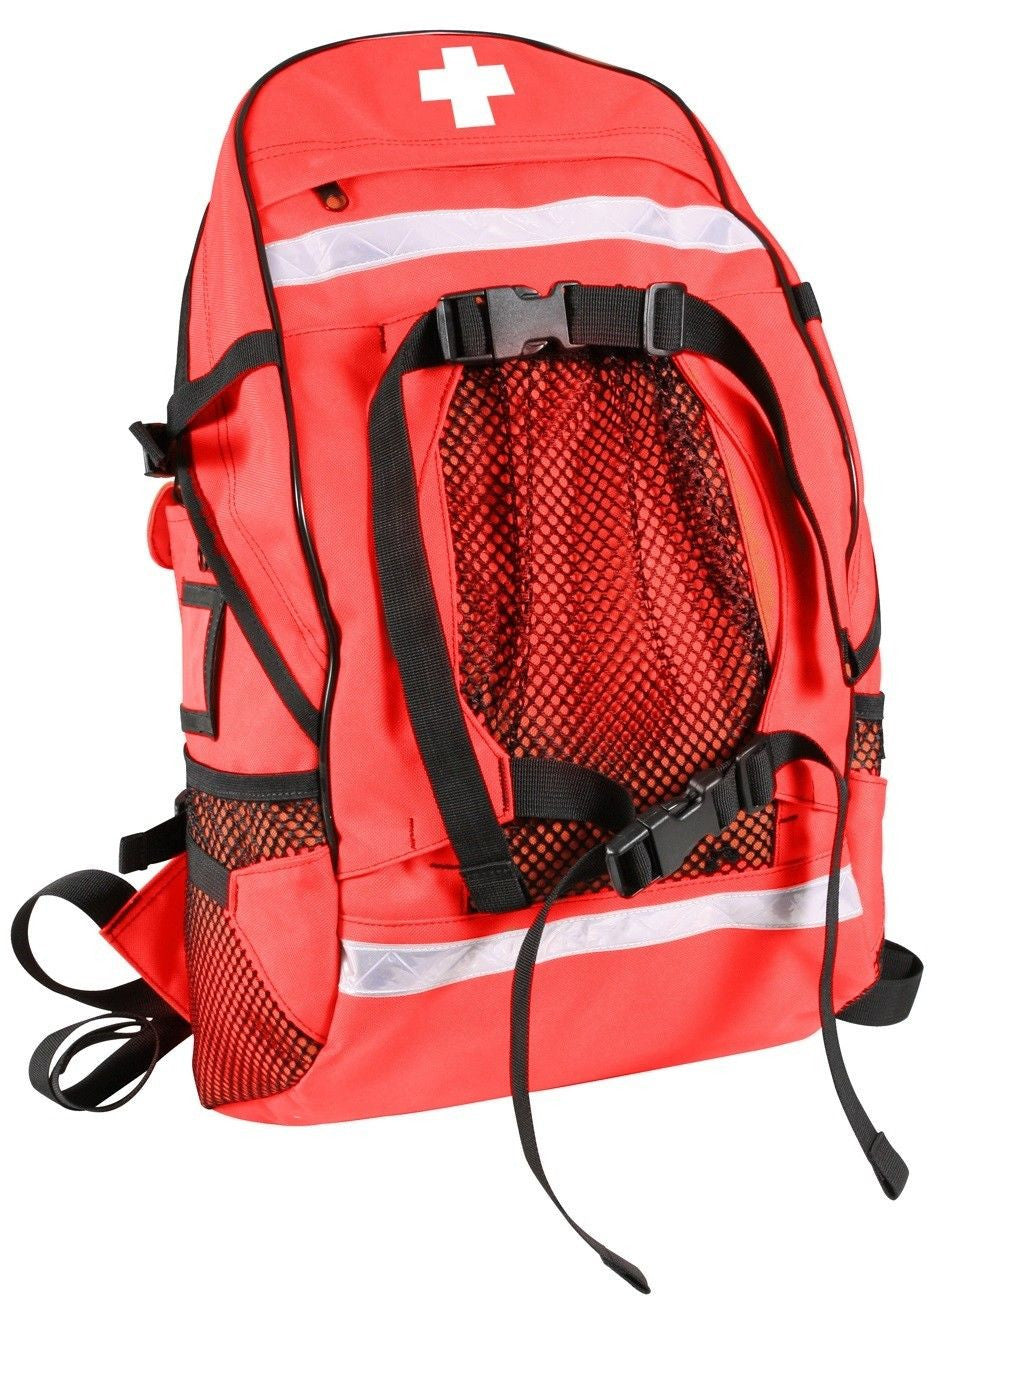 EMS Medic Trauma Backpack Gear Bag - Red First Aid Ambulance Emergency Back Pack